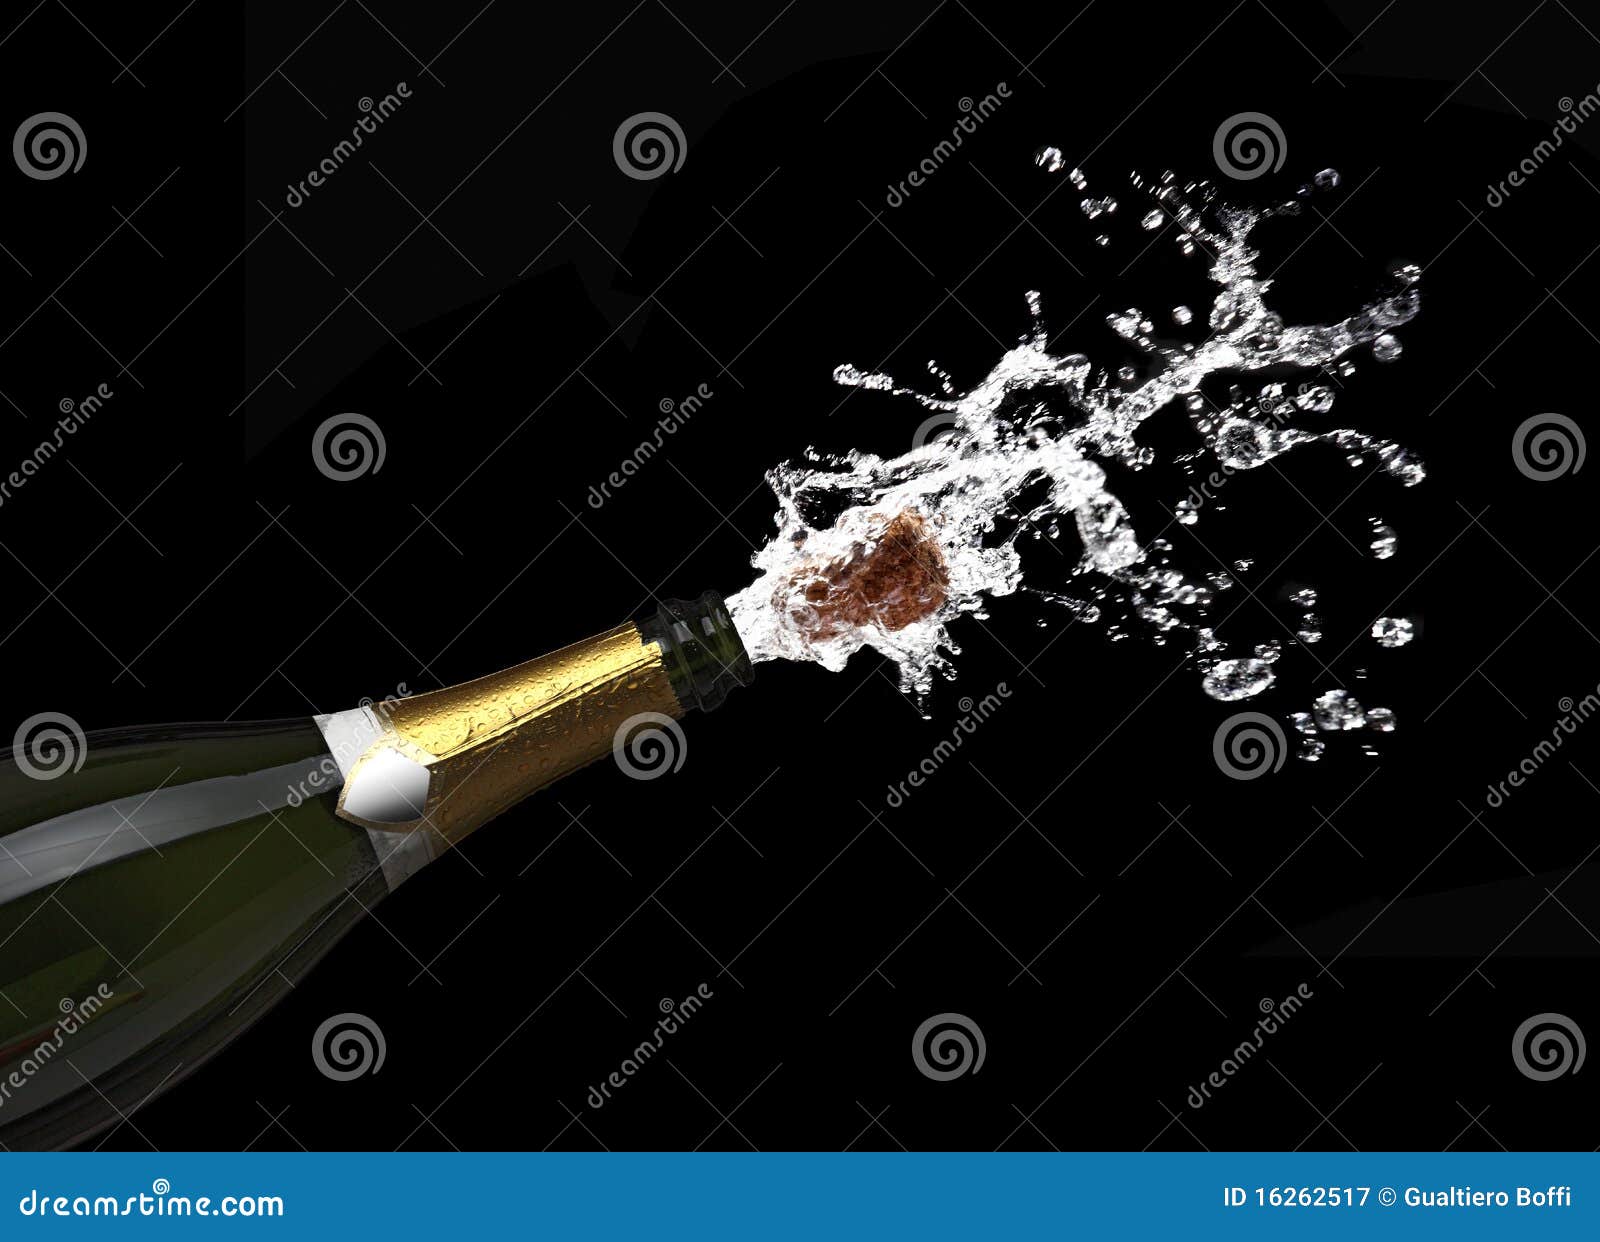 Popping champagne cork stock image. Image of celebration - 16262517